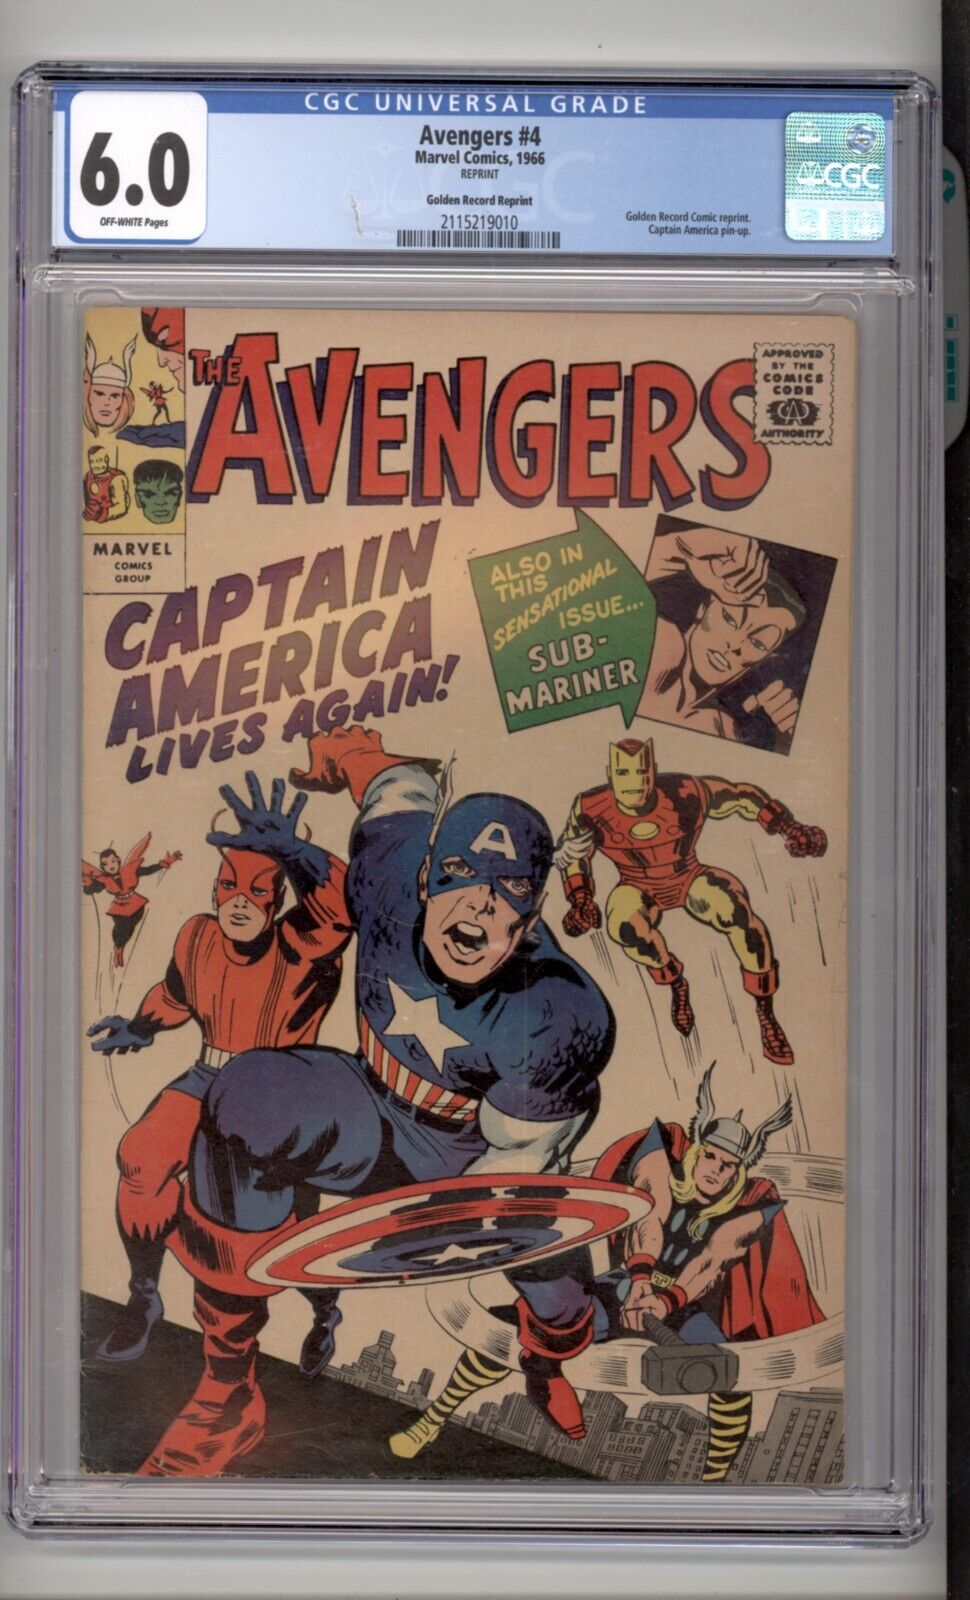 Avengers 4 CGC 6.0 Golden Record Comic Reprint Capt America Pin-Up 1966